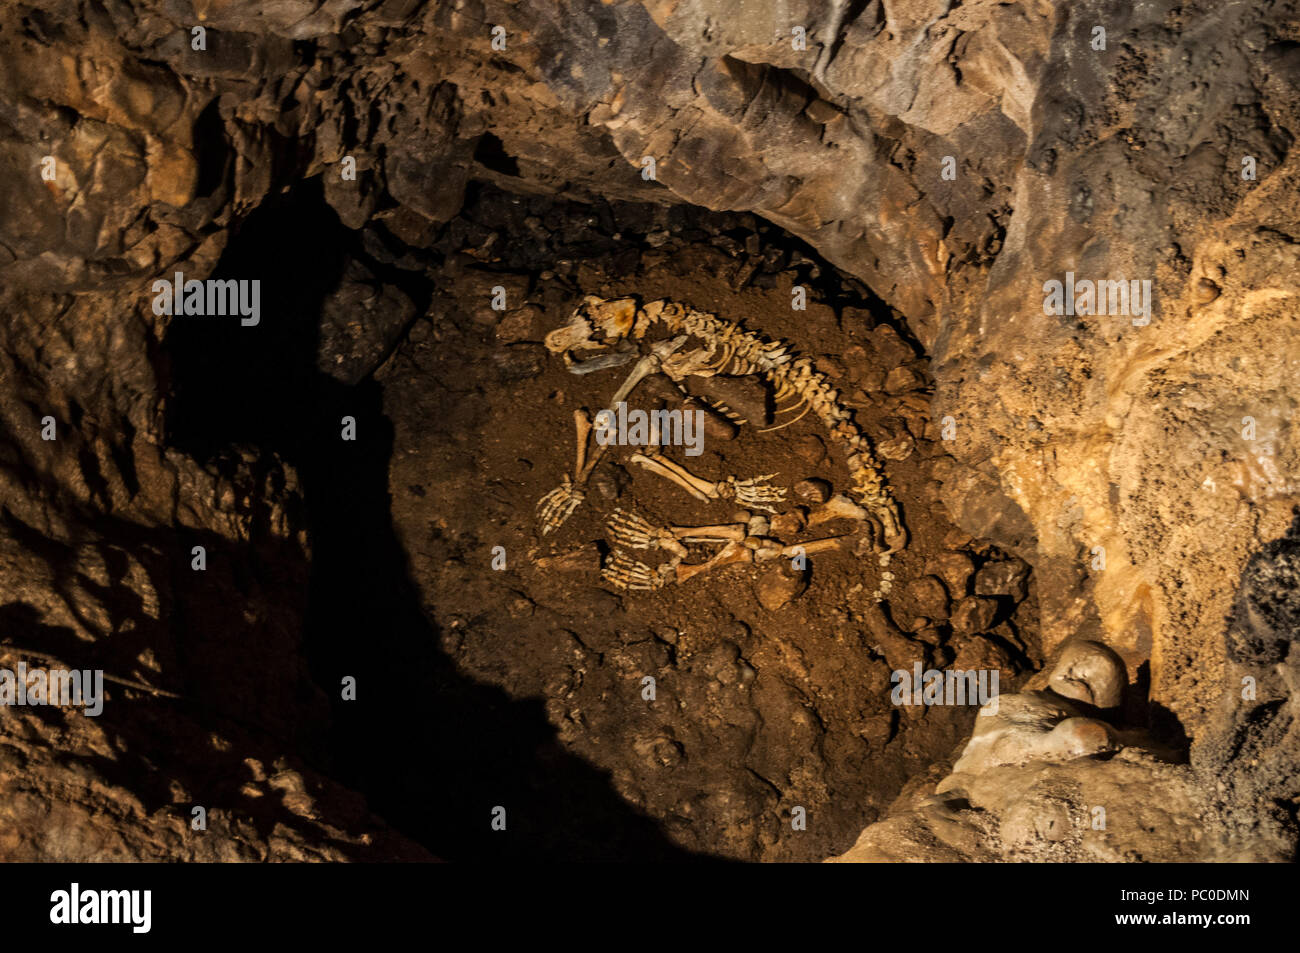 Croatia: the remains of a bear, former inhabitant, in the Caves of Barać (Baraćeve špilje), first recorded in 1699, near the village of Nova Kršlja Stock Photo